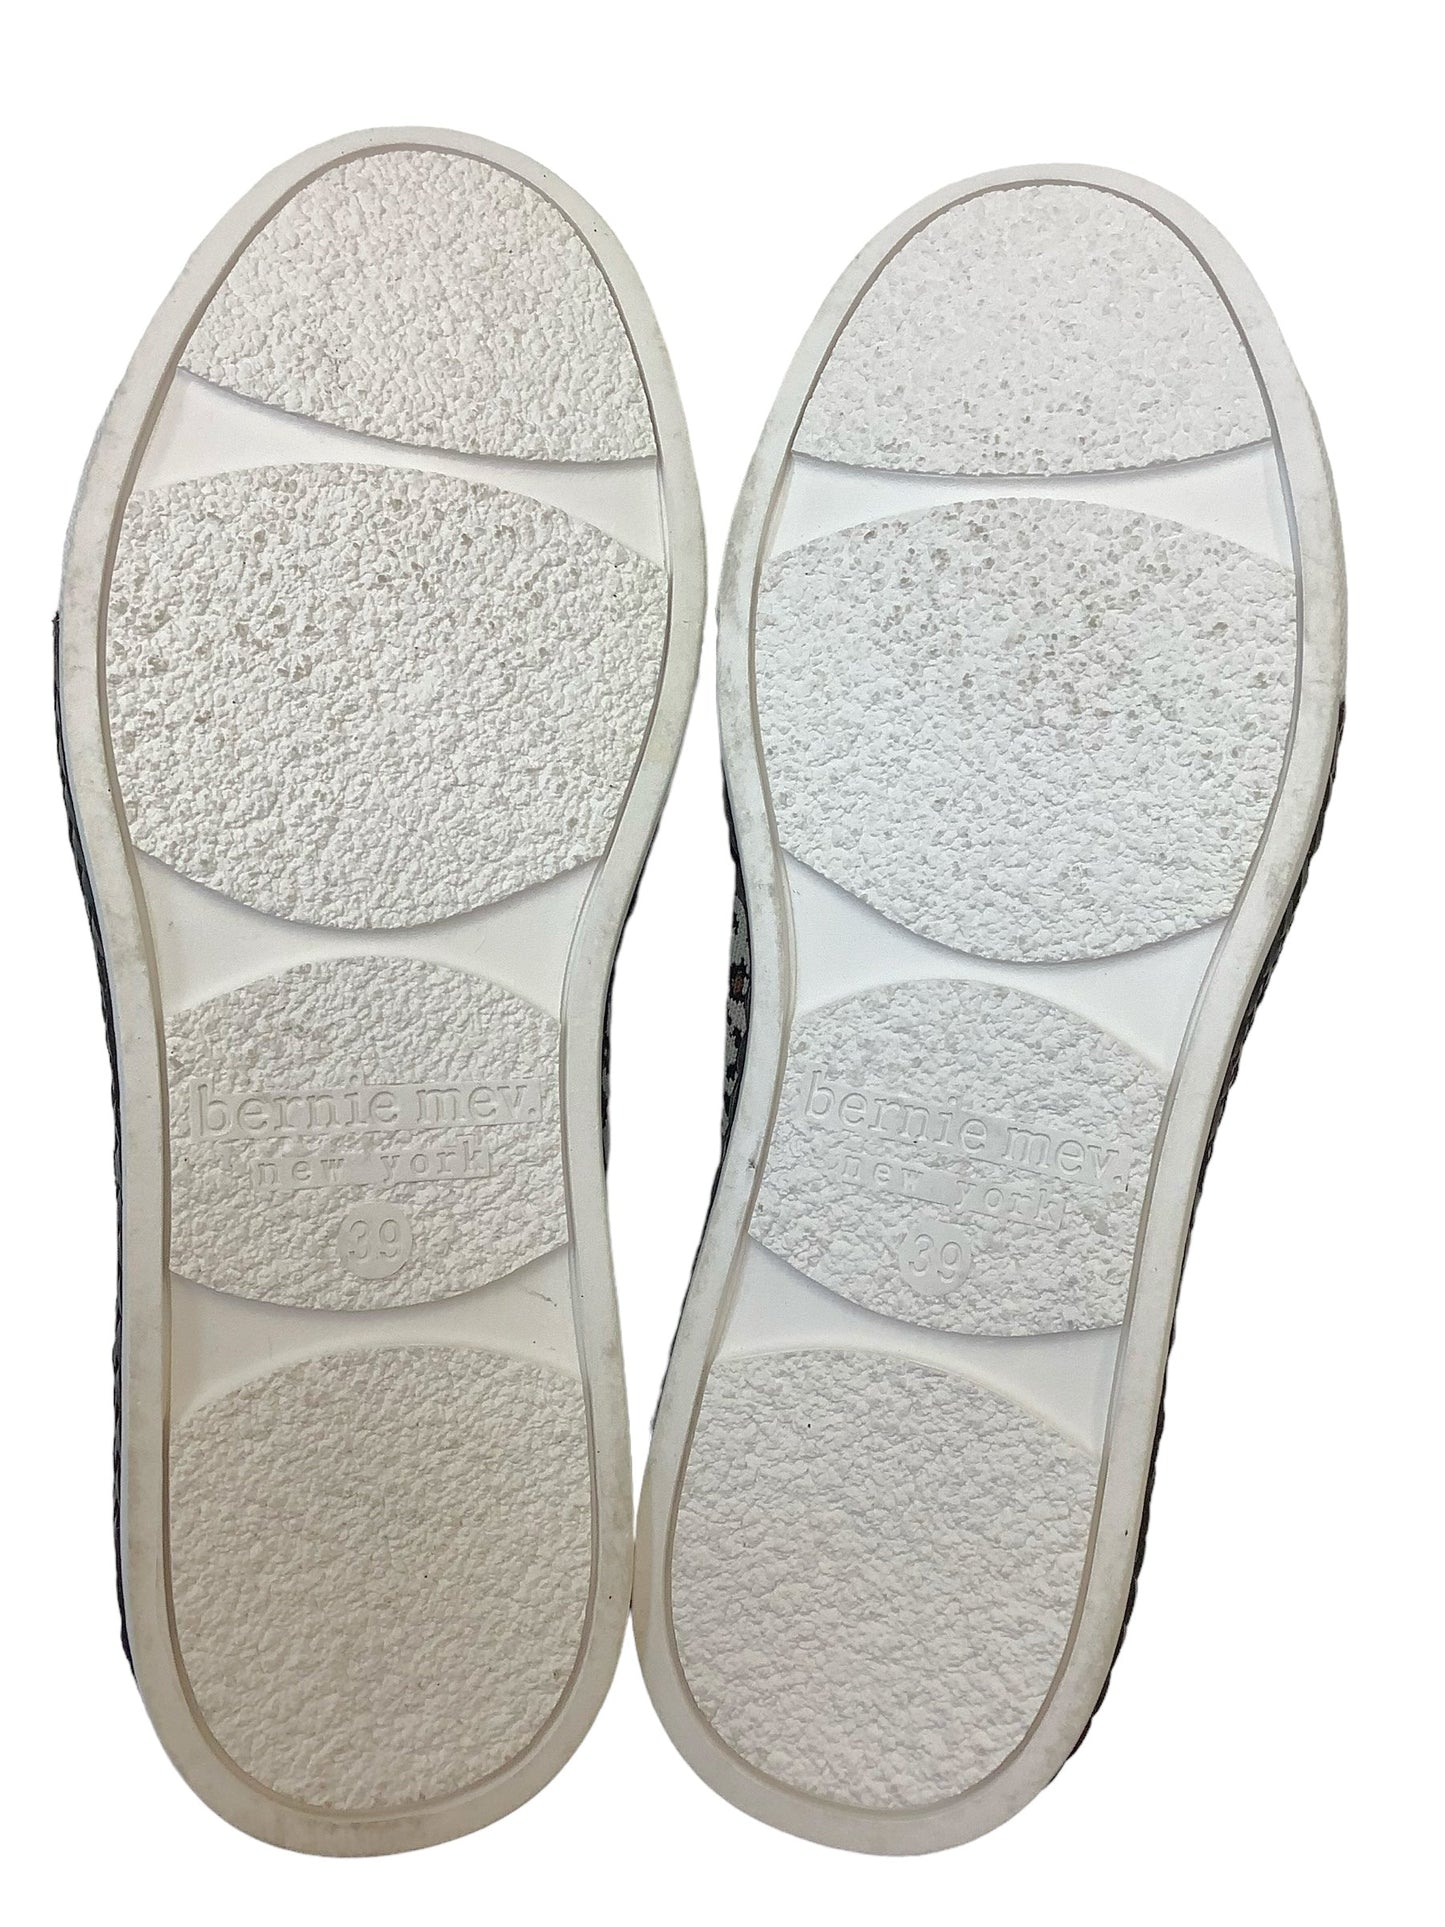 Animal Print Shoes Athletic Bernie Mev, Size 8-8.5(39)